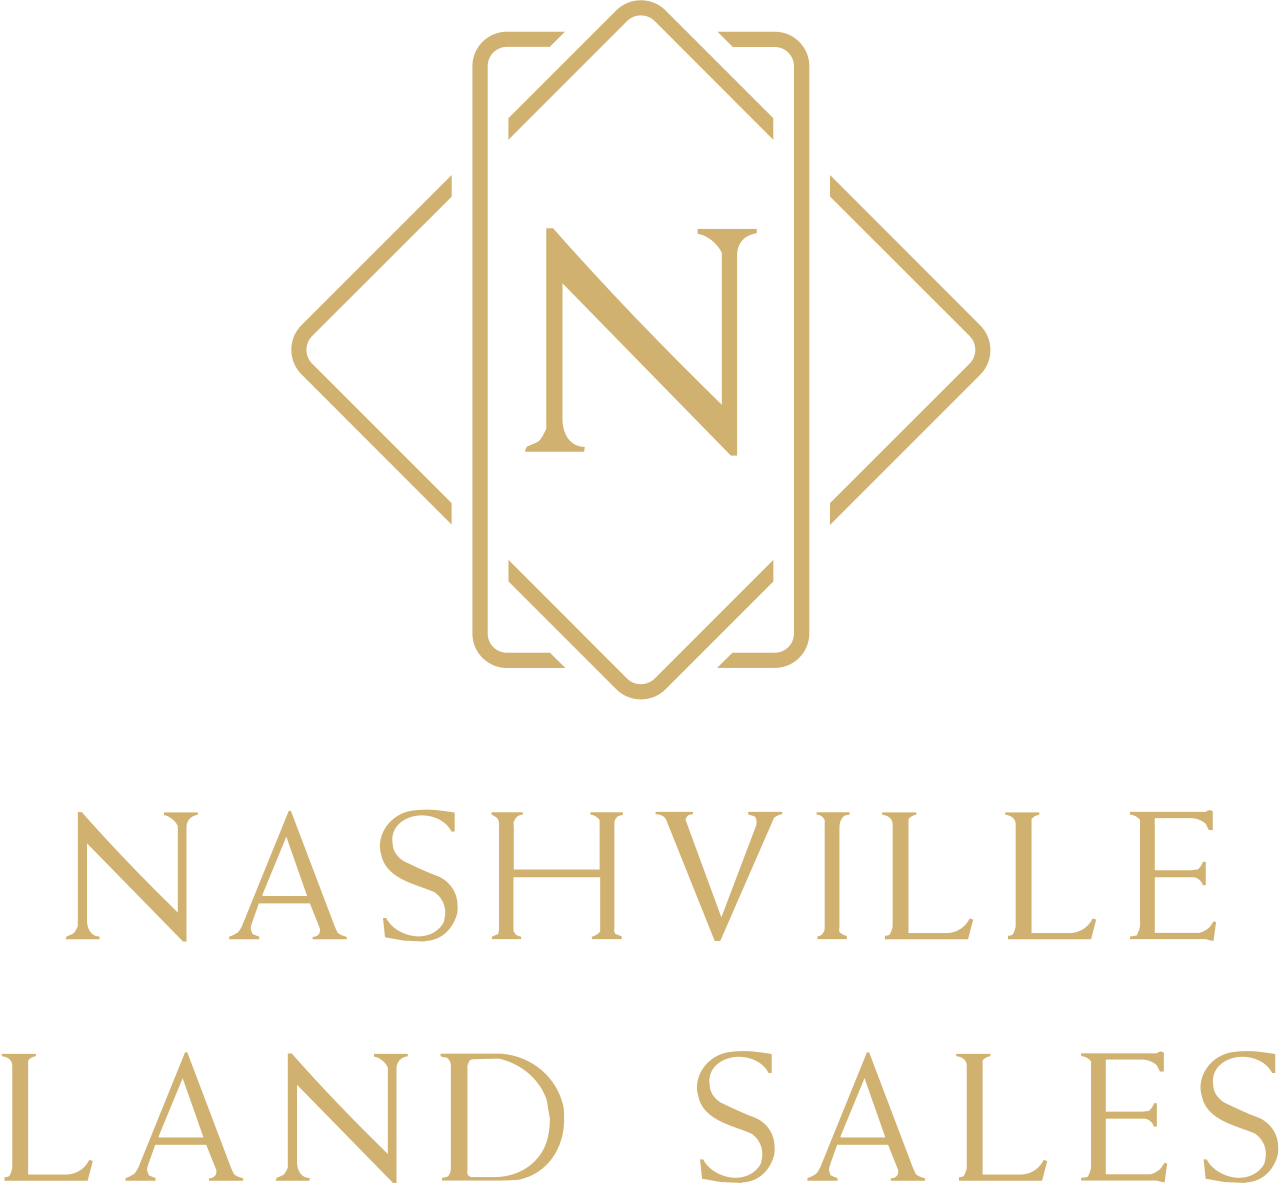  Nashville 
Land Sales's logo